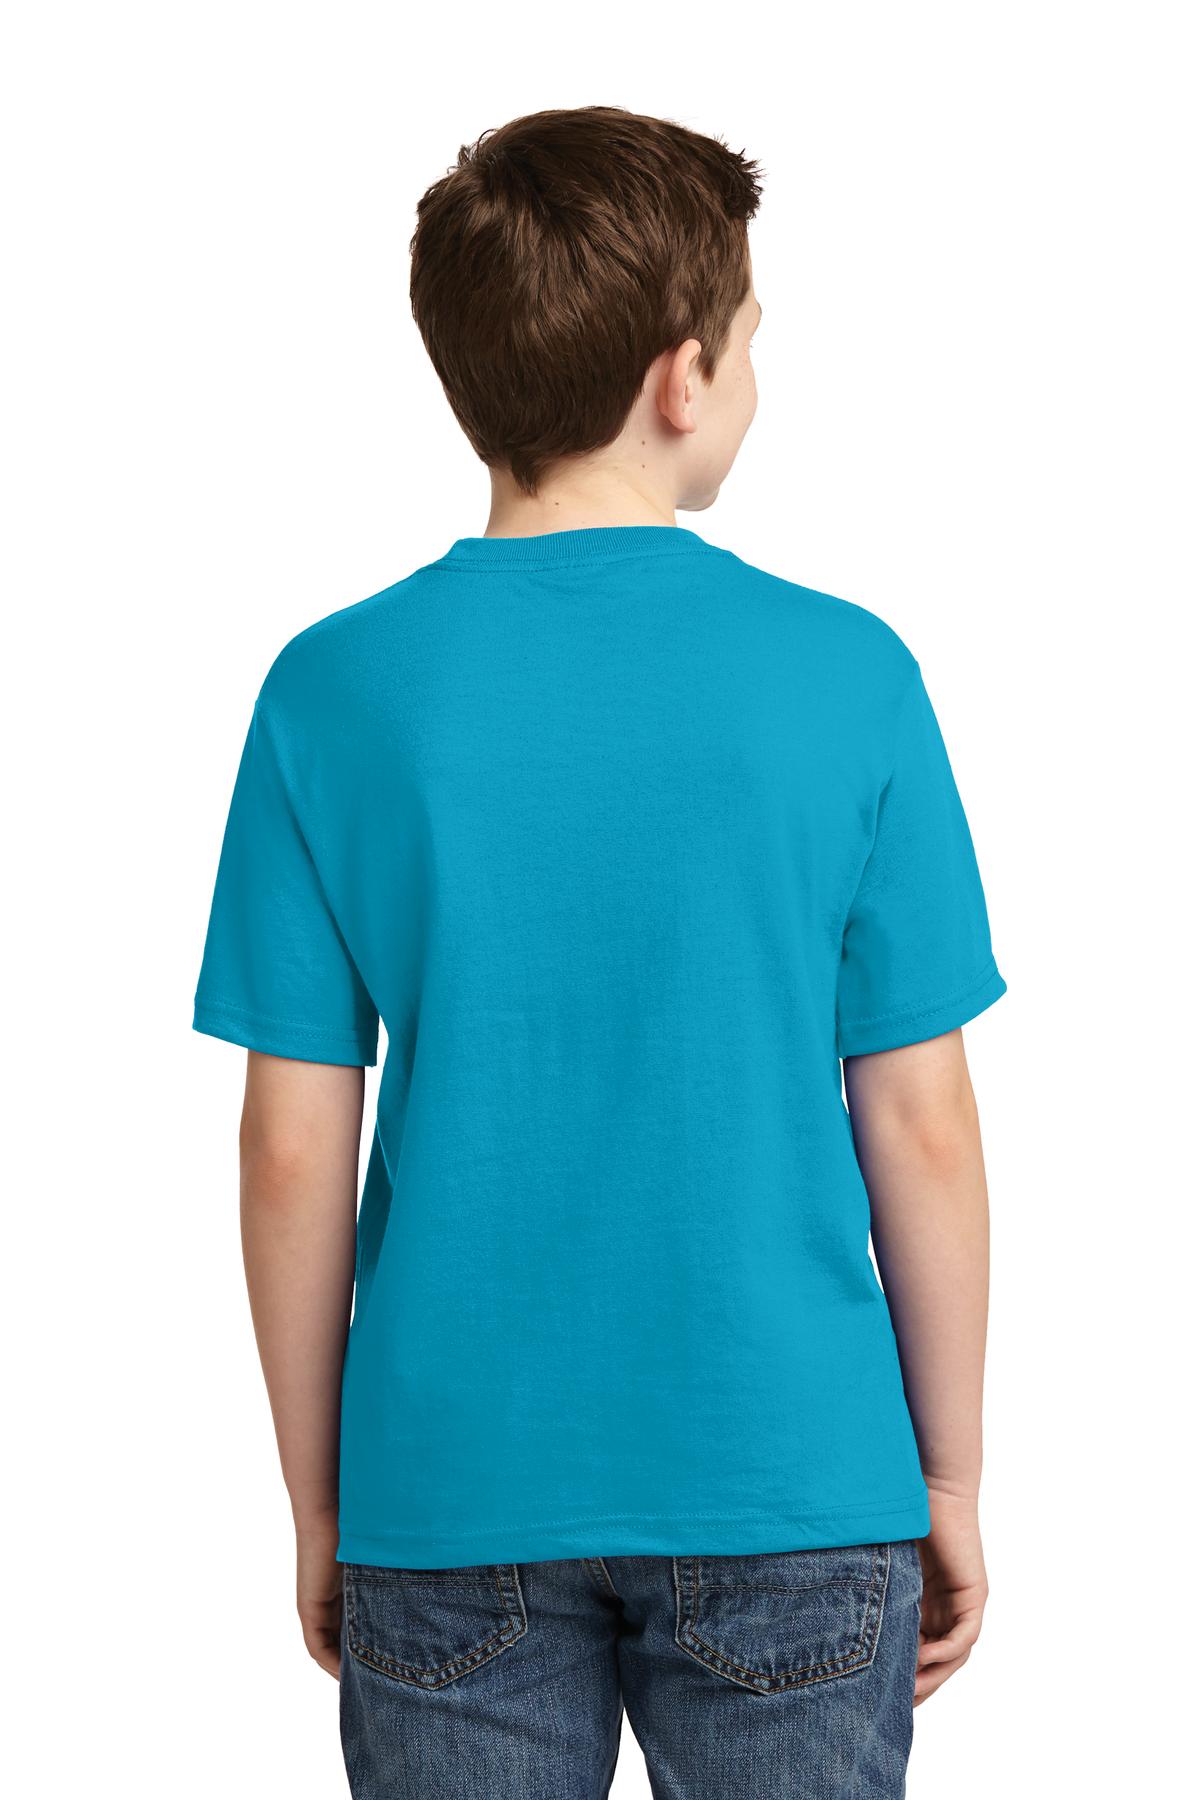 JERZEES® - Youth Dri-Power® 50/50 Cotton/Poly T-Shirt. 29B [California Blue] - DFW Impression